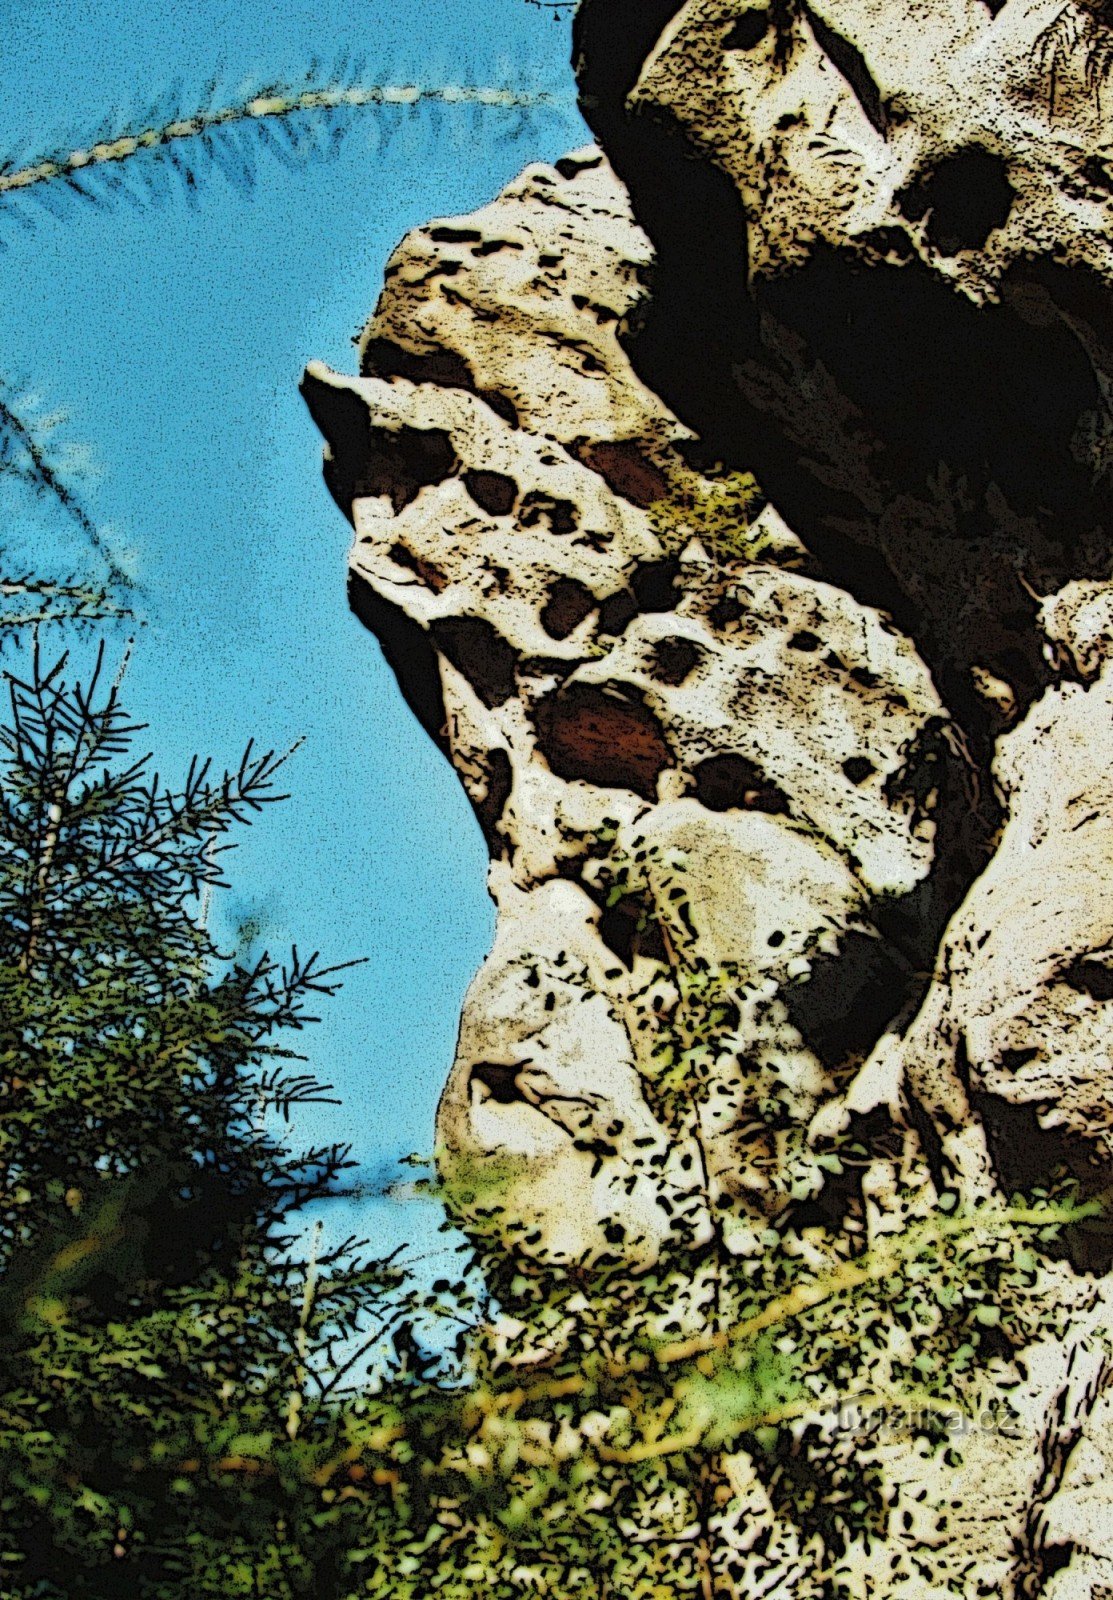 acantilados de rocas inferiores